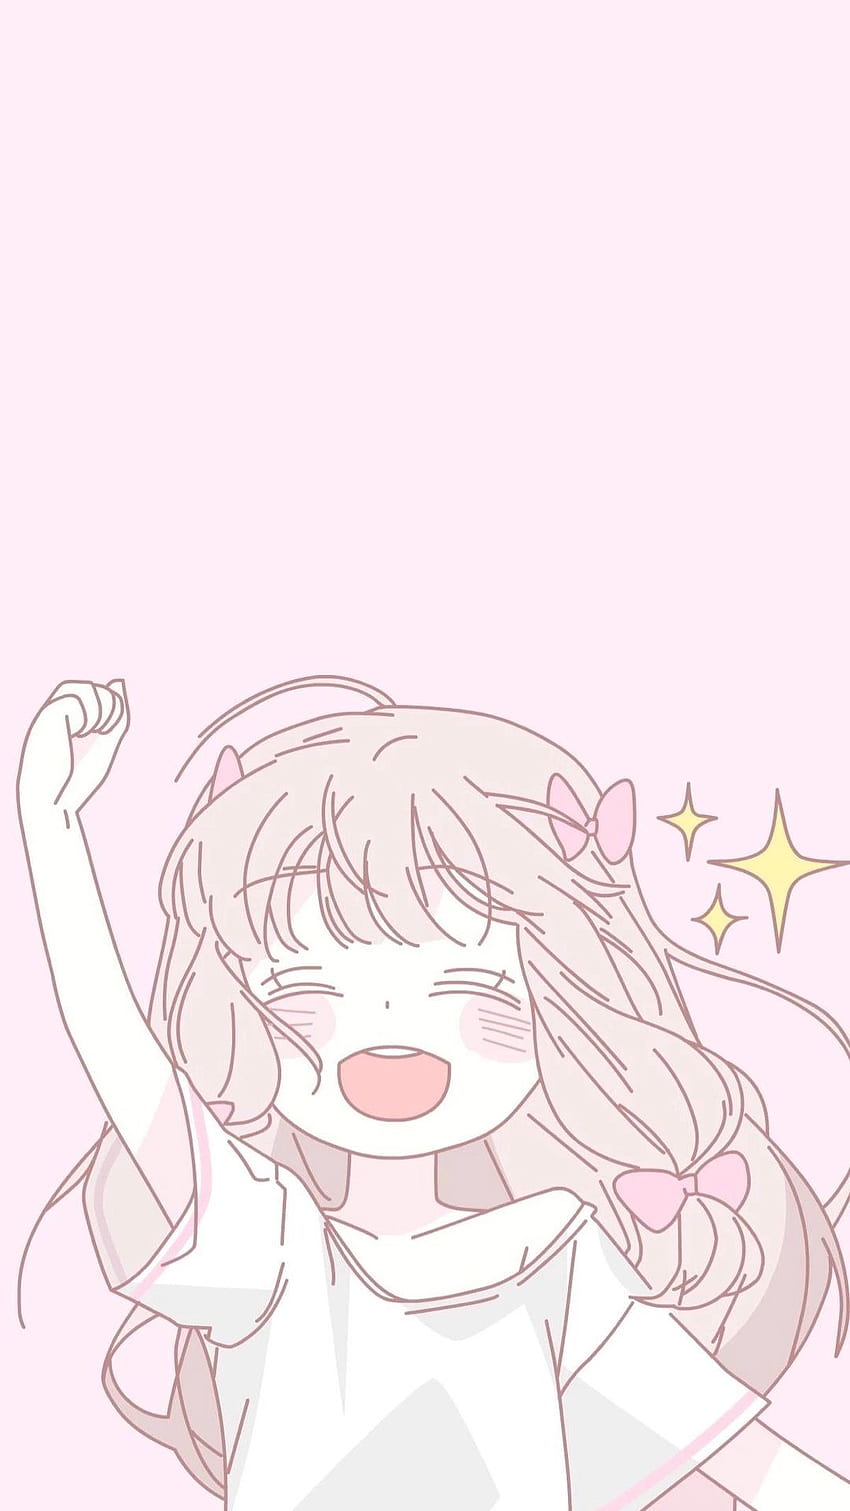 Happy Anime girl Smiling! - Aww post - Imgur